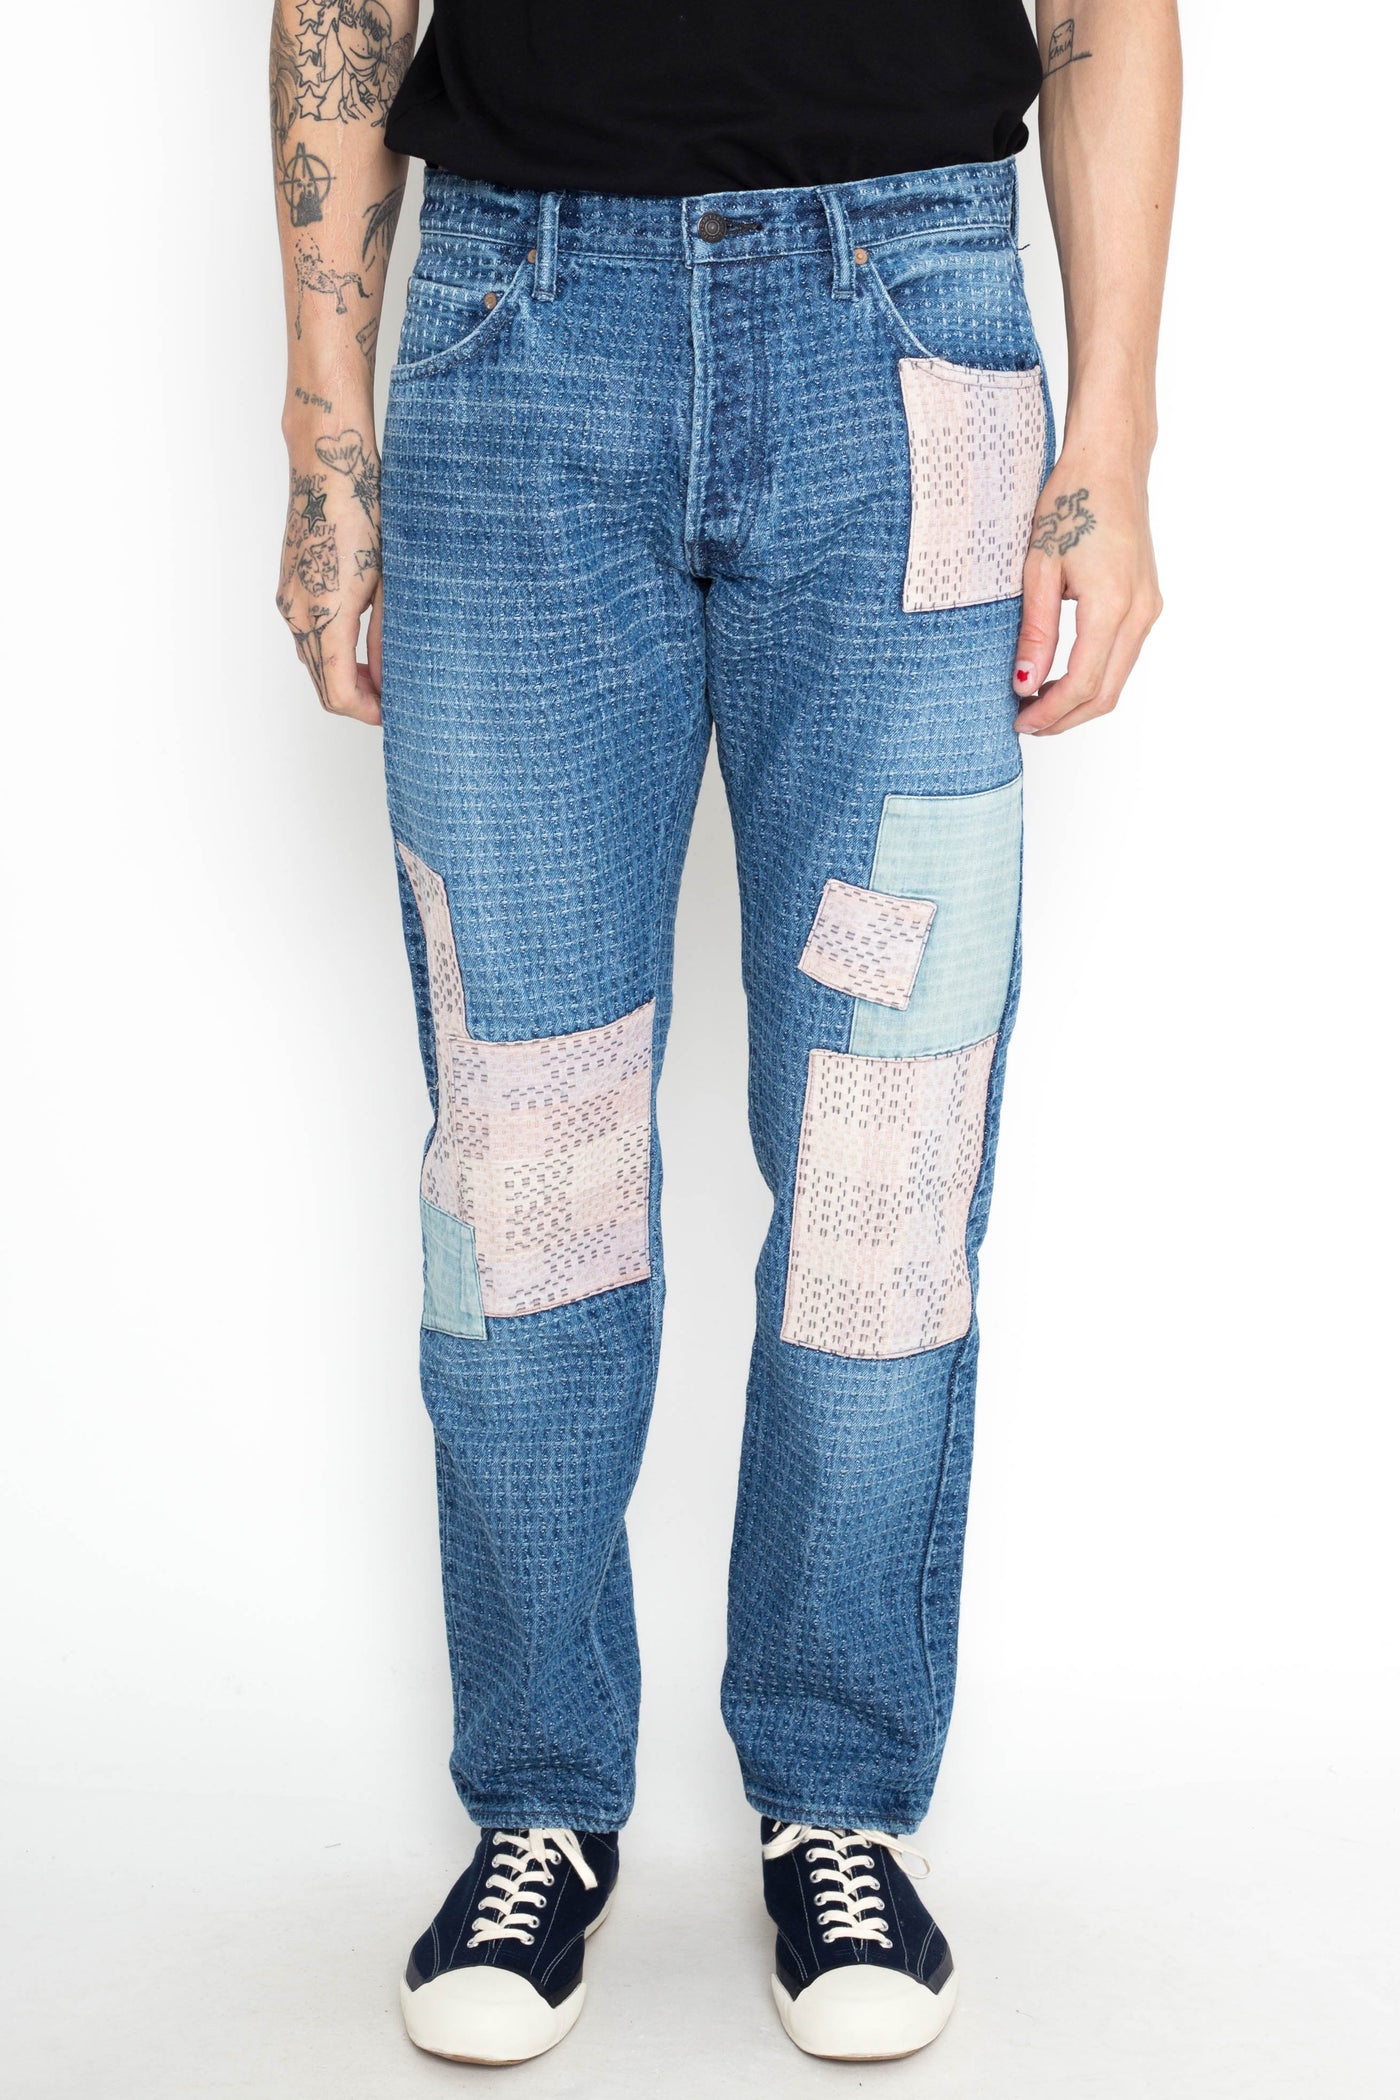 D1855US Sashiko BORO Denim Jeans - Used Indigo